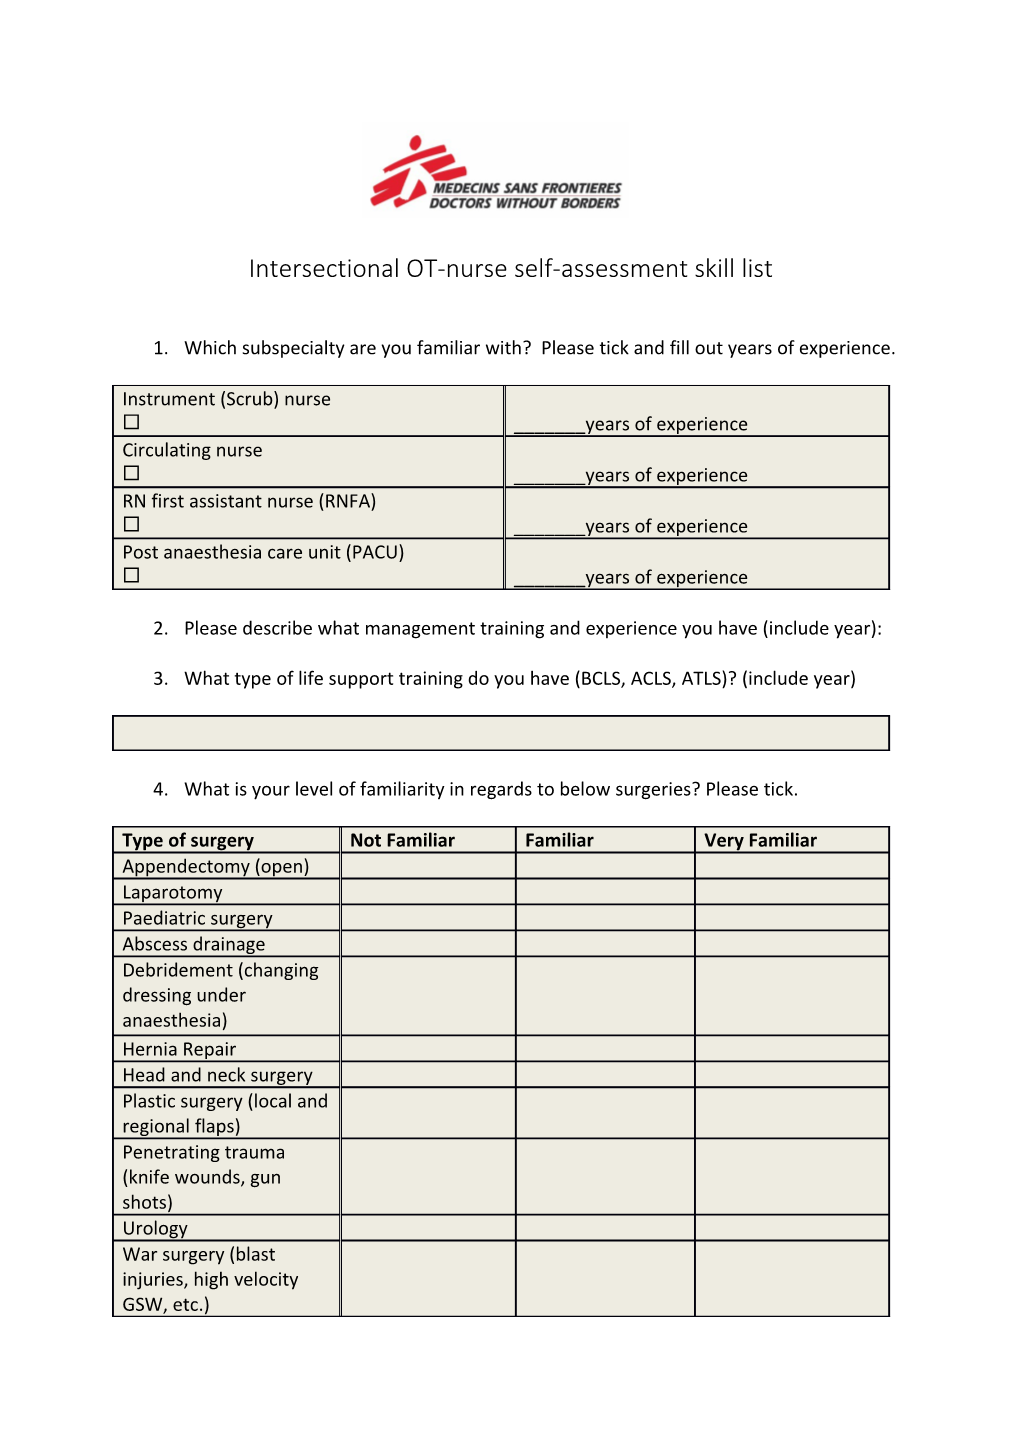 Intersectionalot-Nurse Self-Assessment Skill List